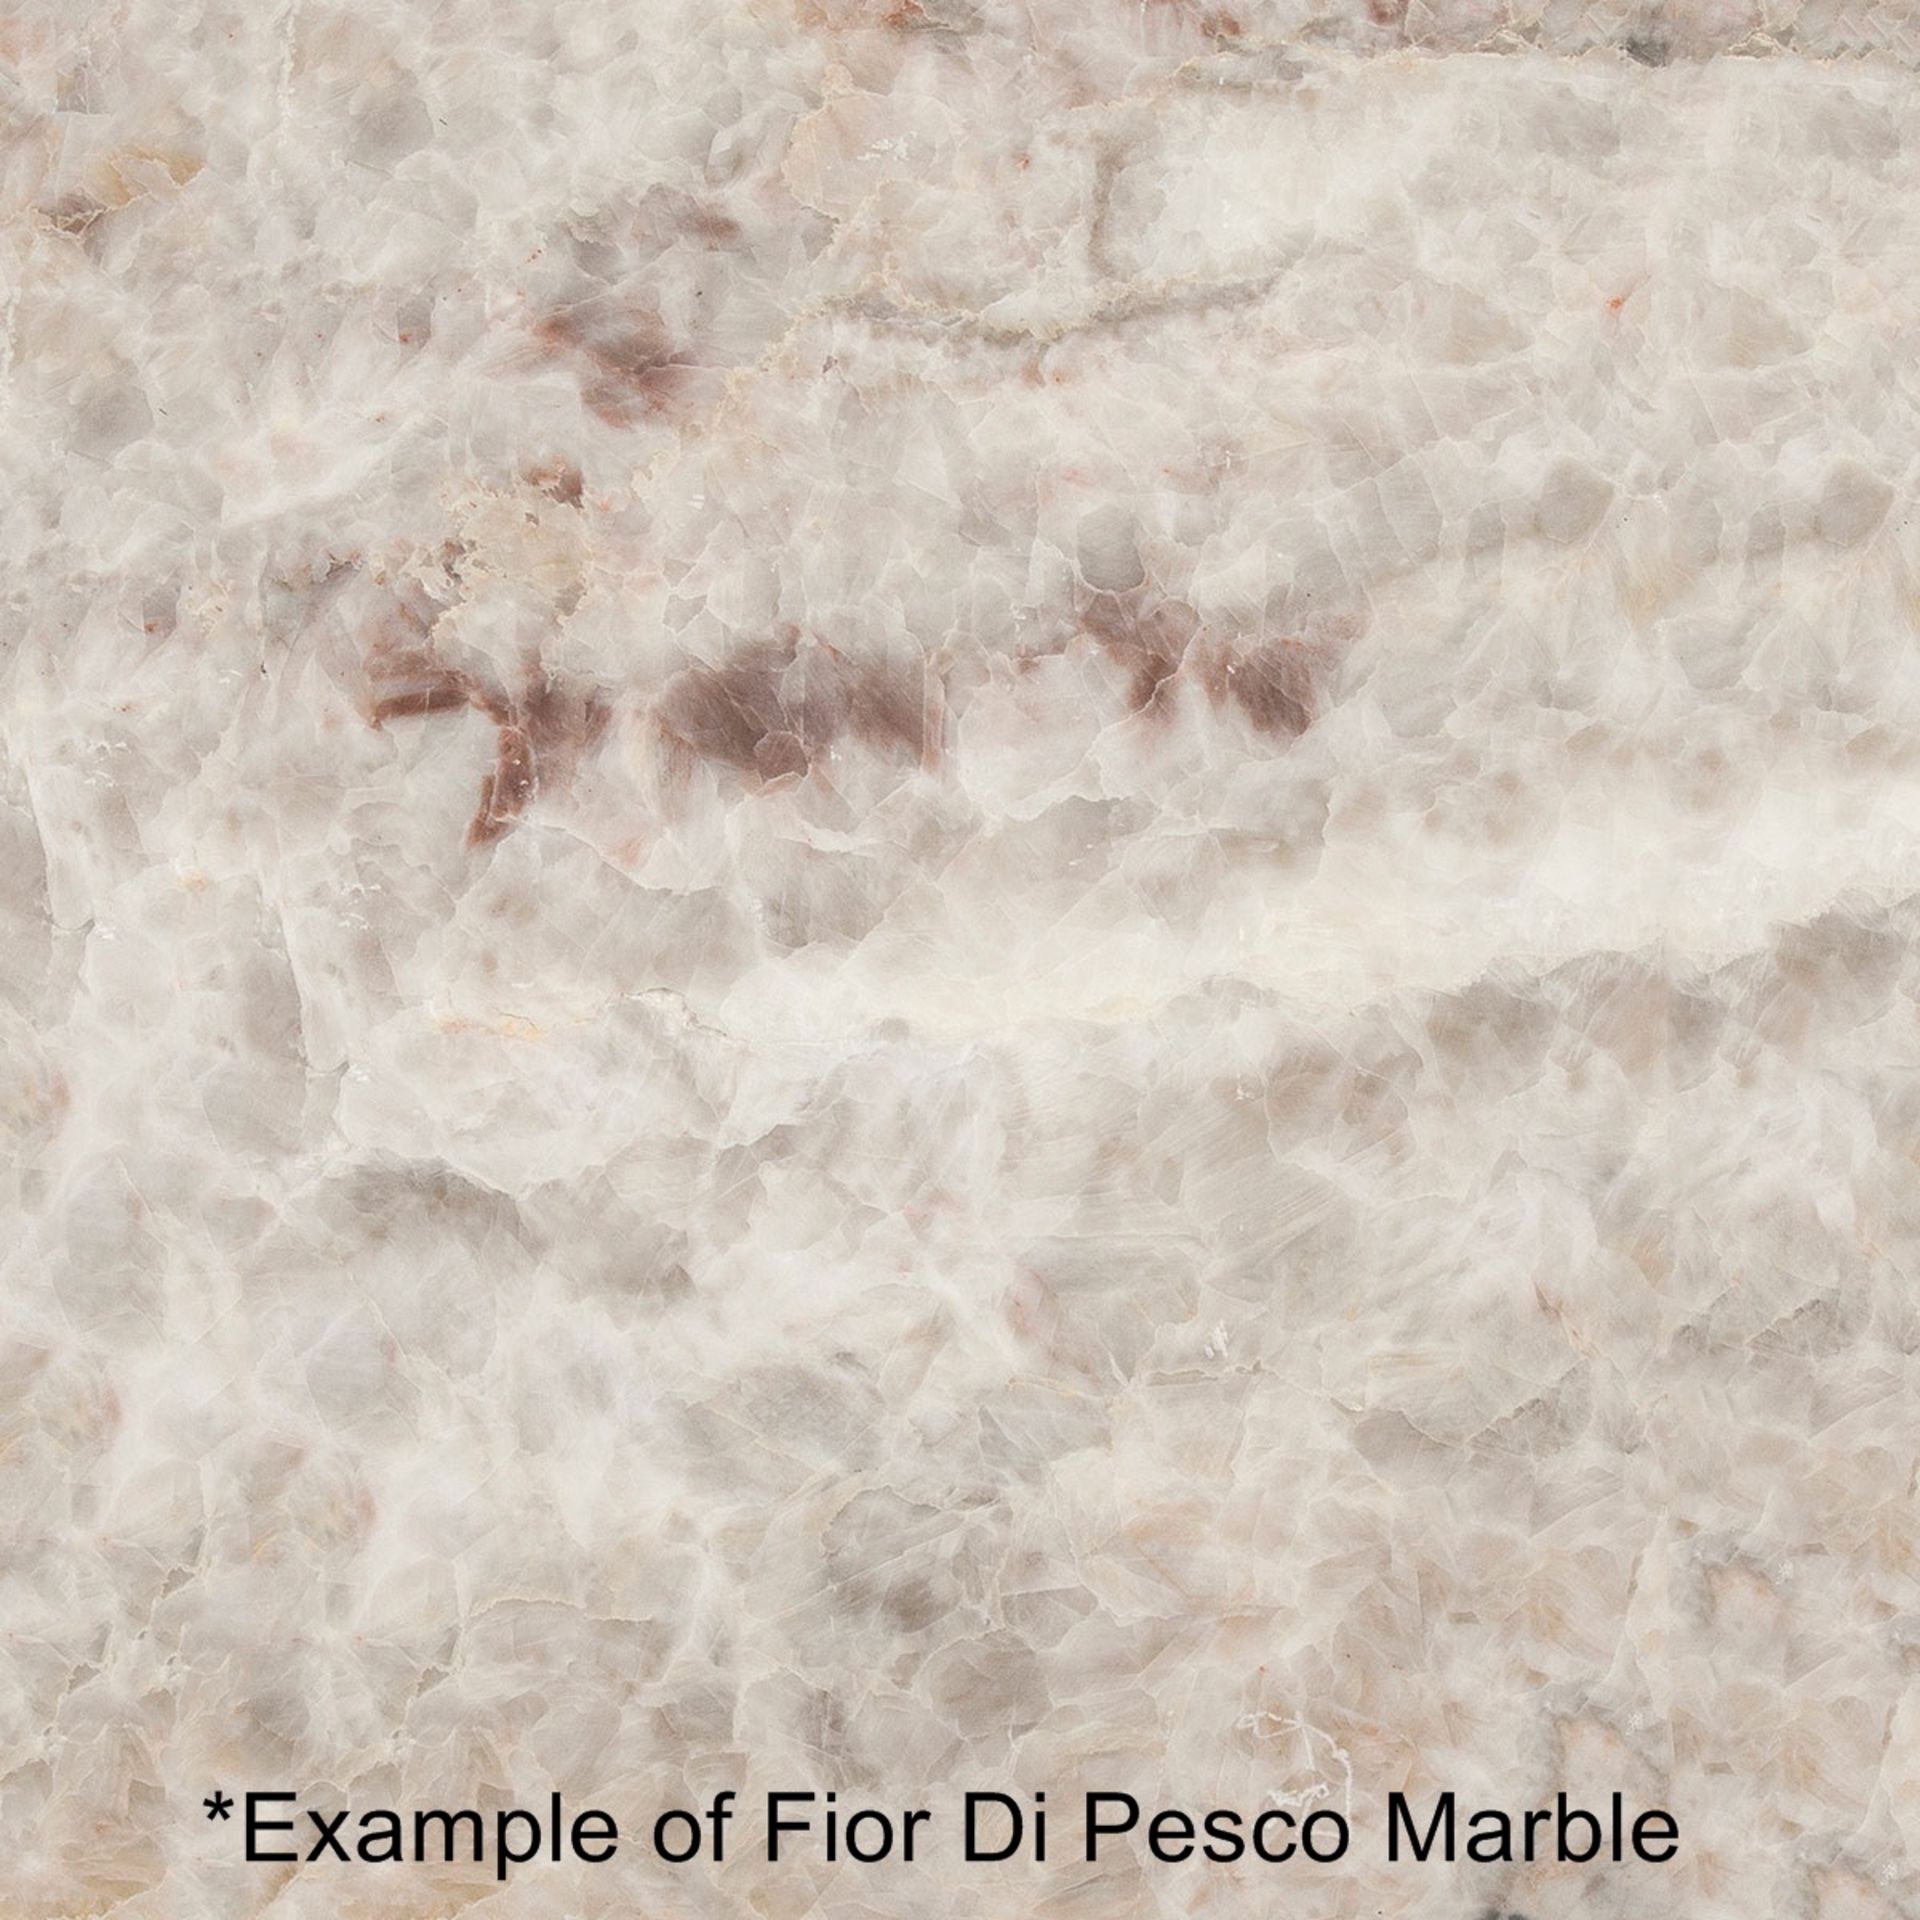 1 x POLTRONA FRAU 'Othello' Fior Di Pesco 2.6 Metre Long Marble Table Top - Dimensions: 260x100cm - Image 4 of 6